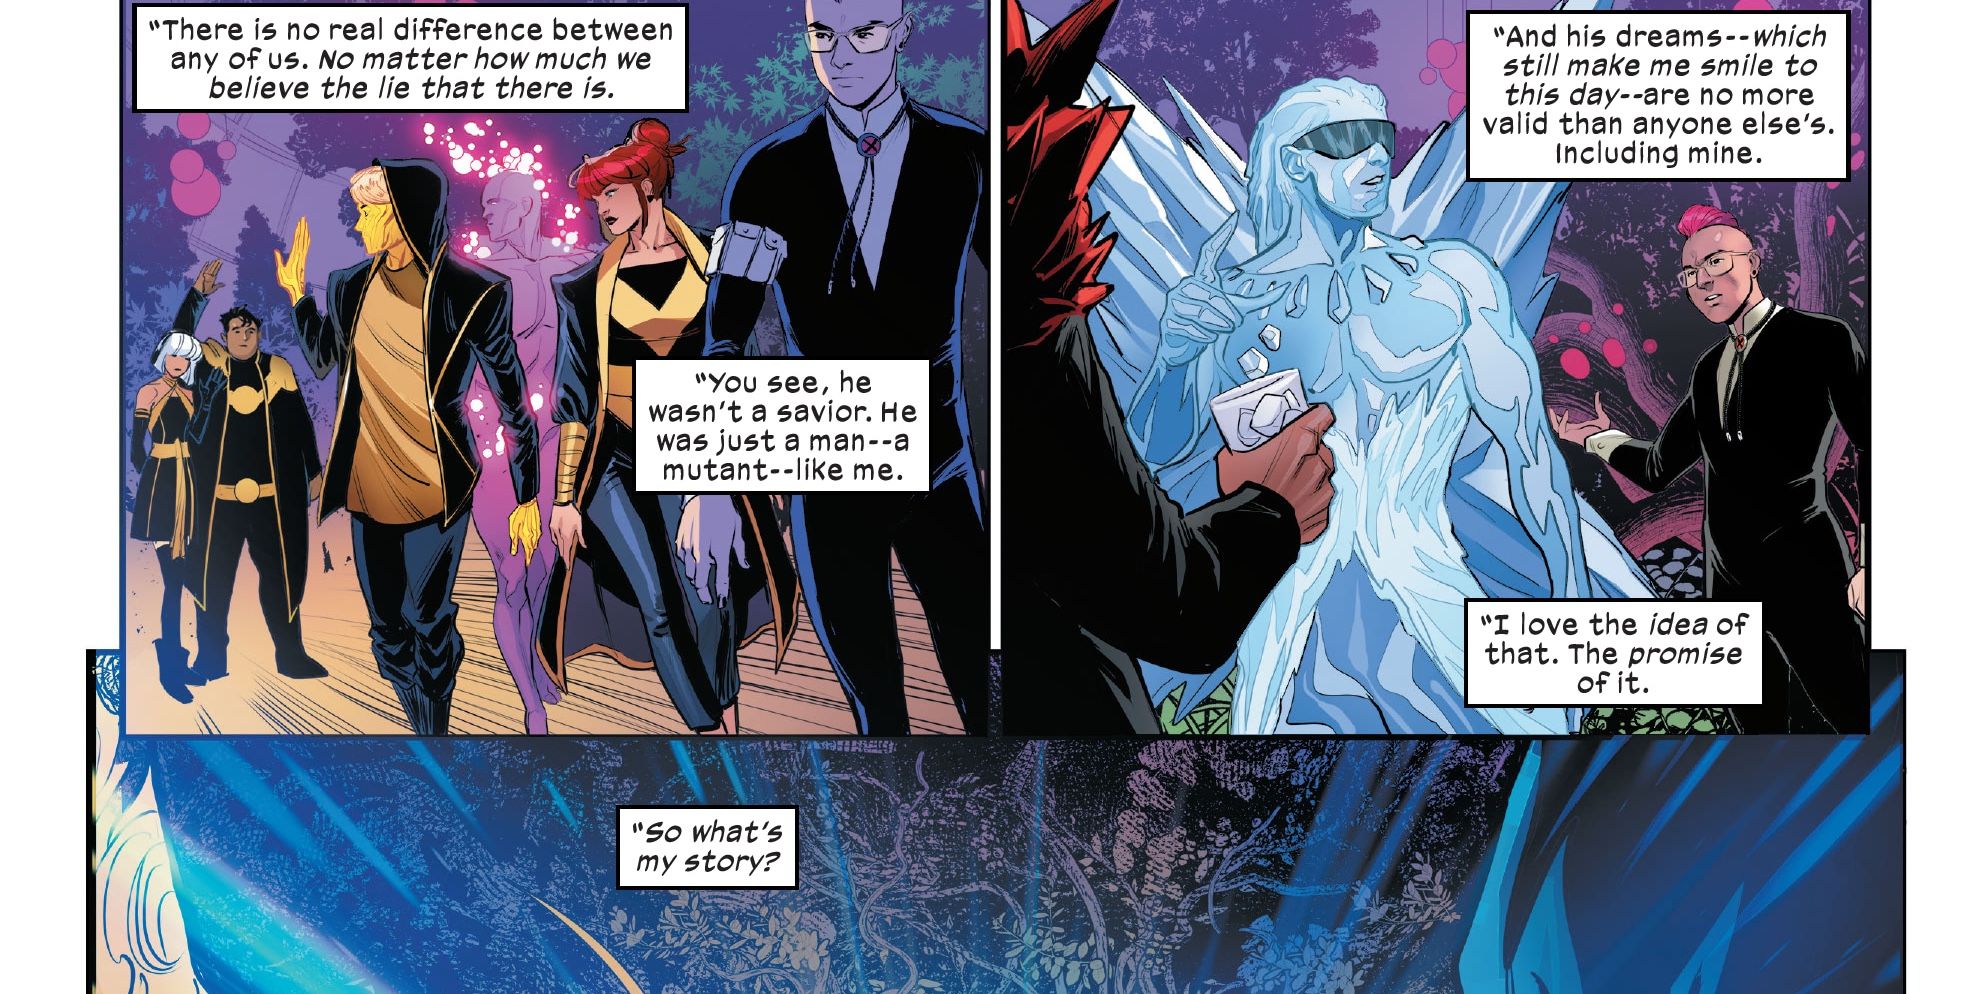 Cyclops talks about Xavier's dream